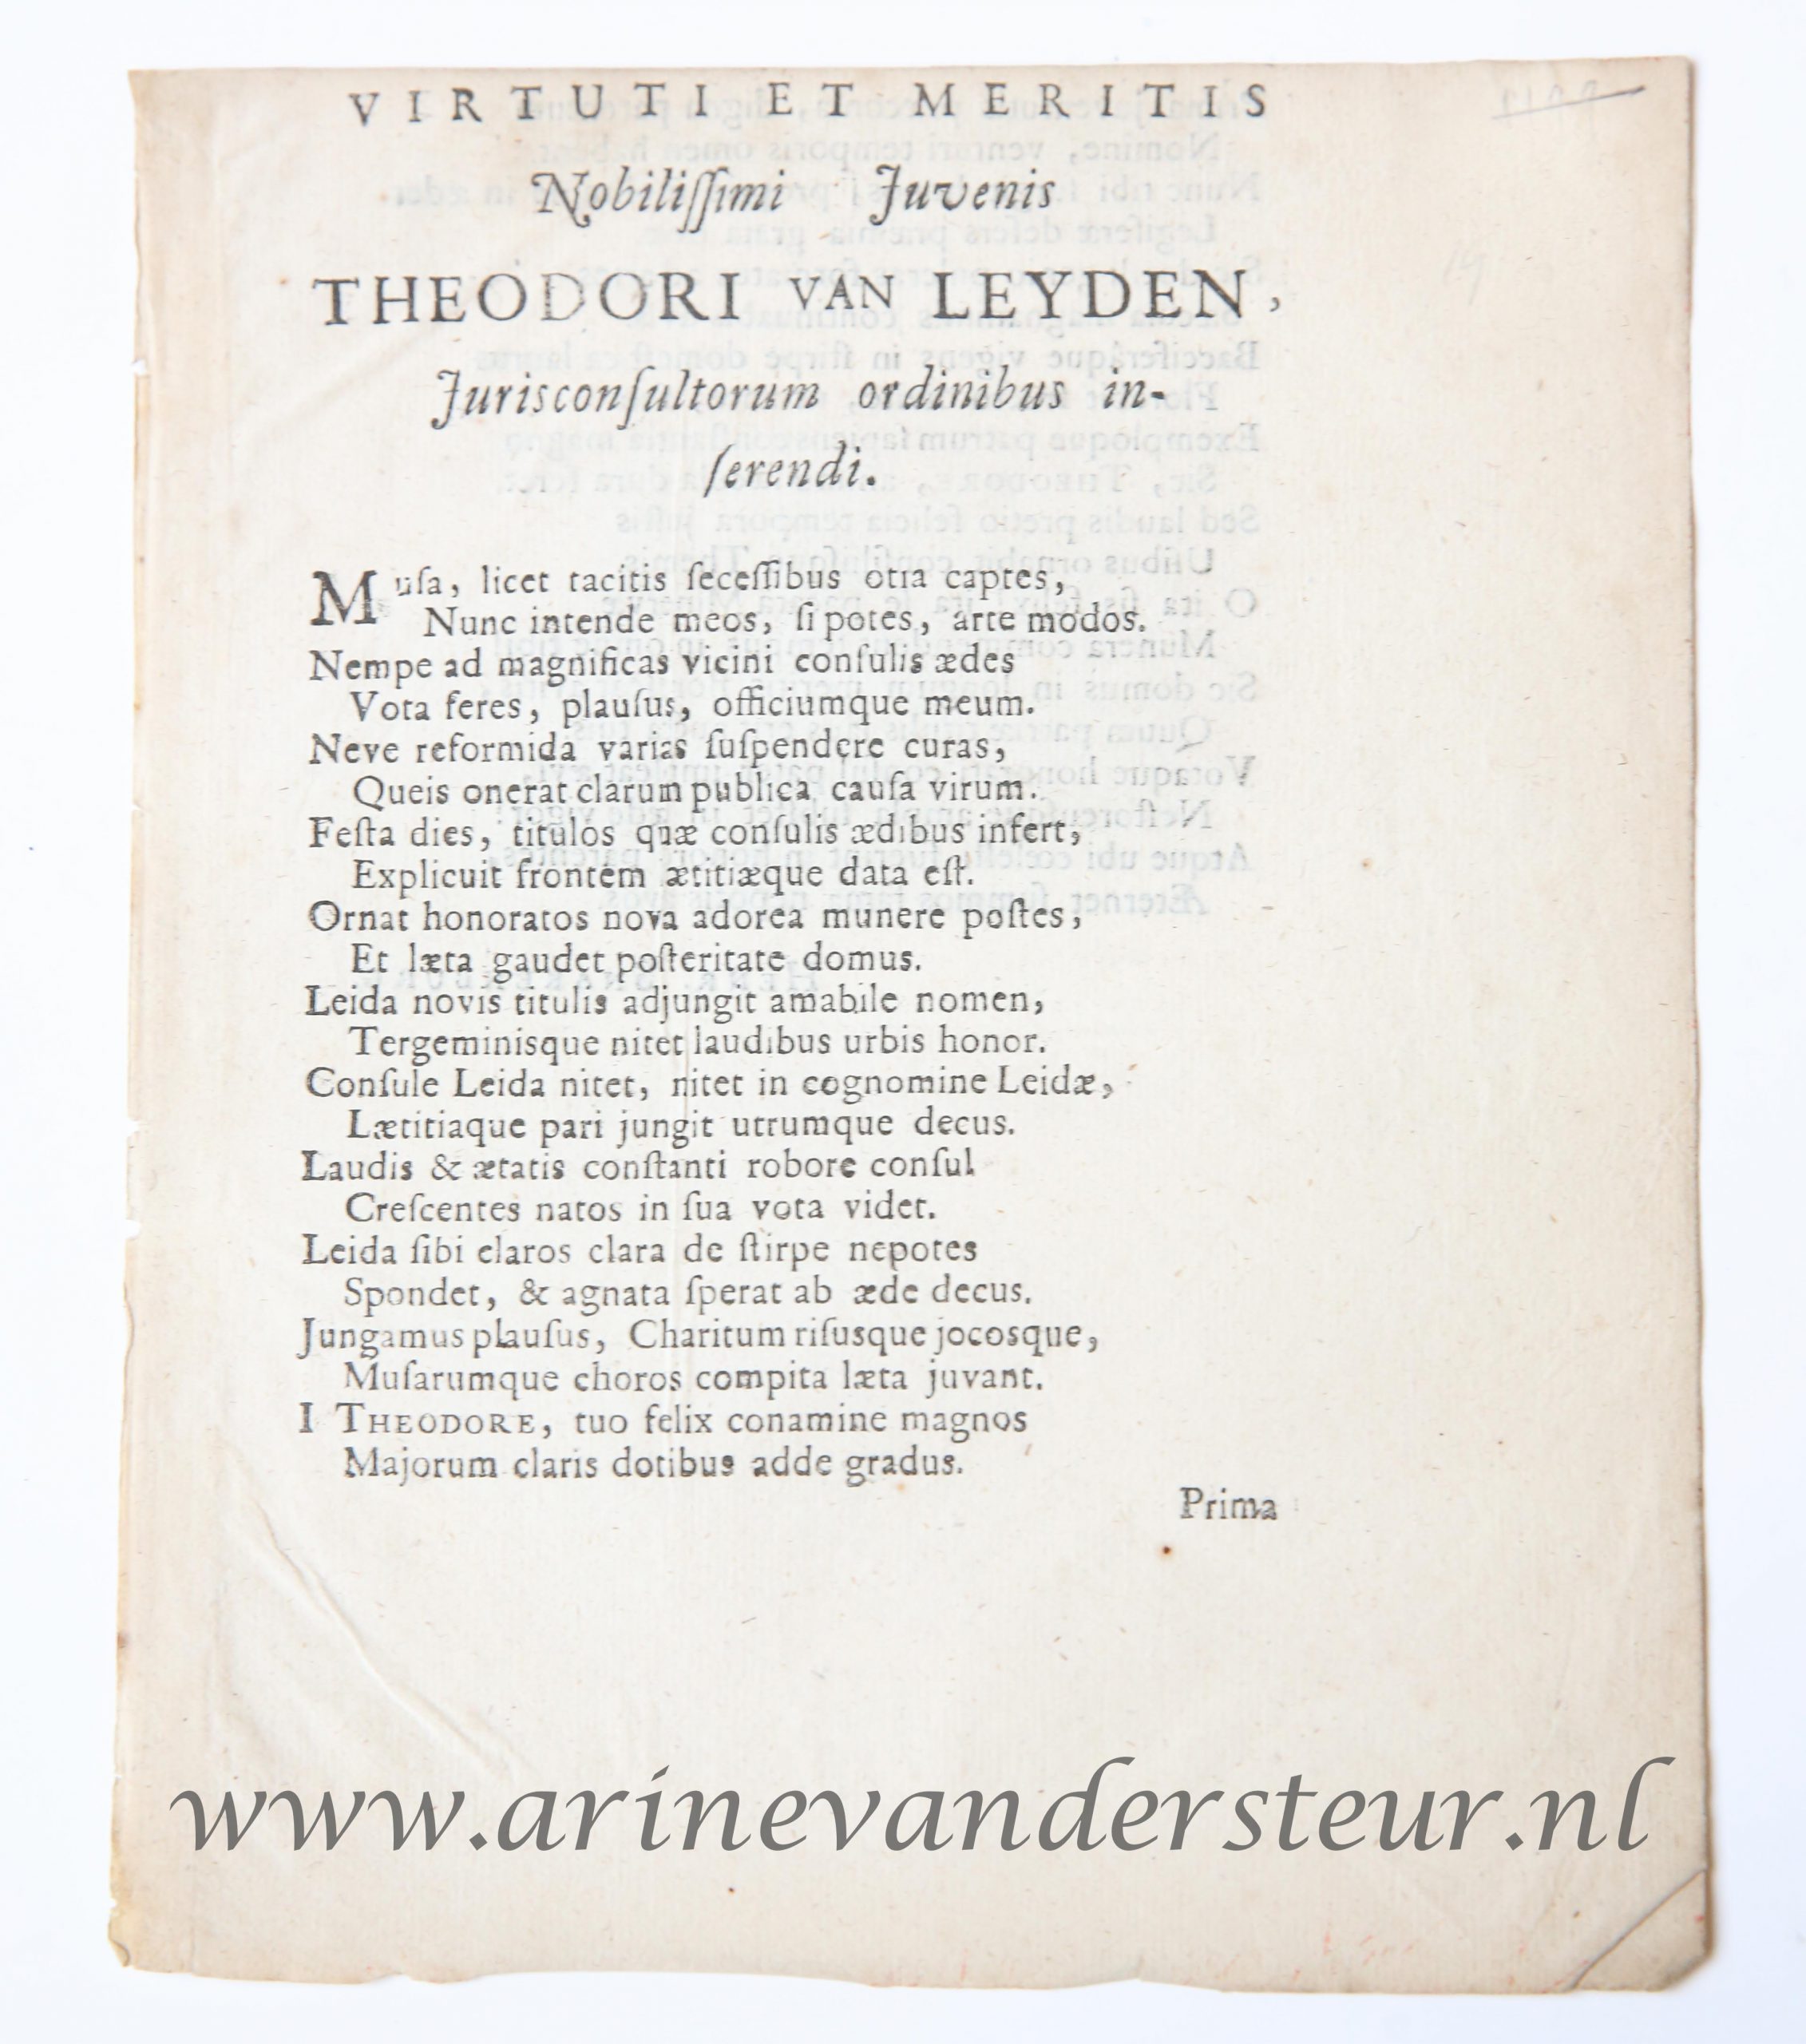  - Virtuti et meritis nobilissimi juvenis Theodori Van leyden, jurisconsultorum ordinibus inserendi. z.p. [leiden], z.j. 4: [2] p. [Incompleet. Laatste twee bladen [D3-4] van Van Leydens 'Disputatio juridica inauguralis', Leiden, Elzevier, 1711.]